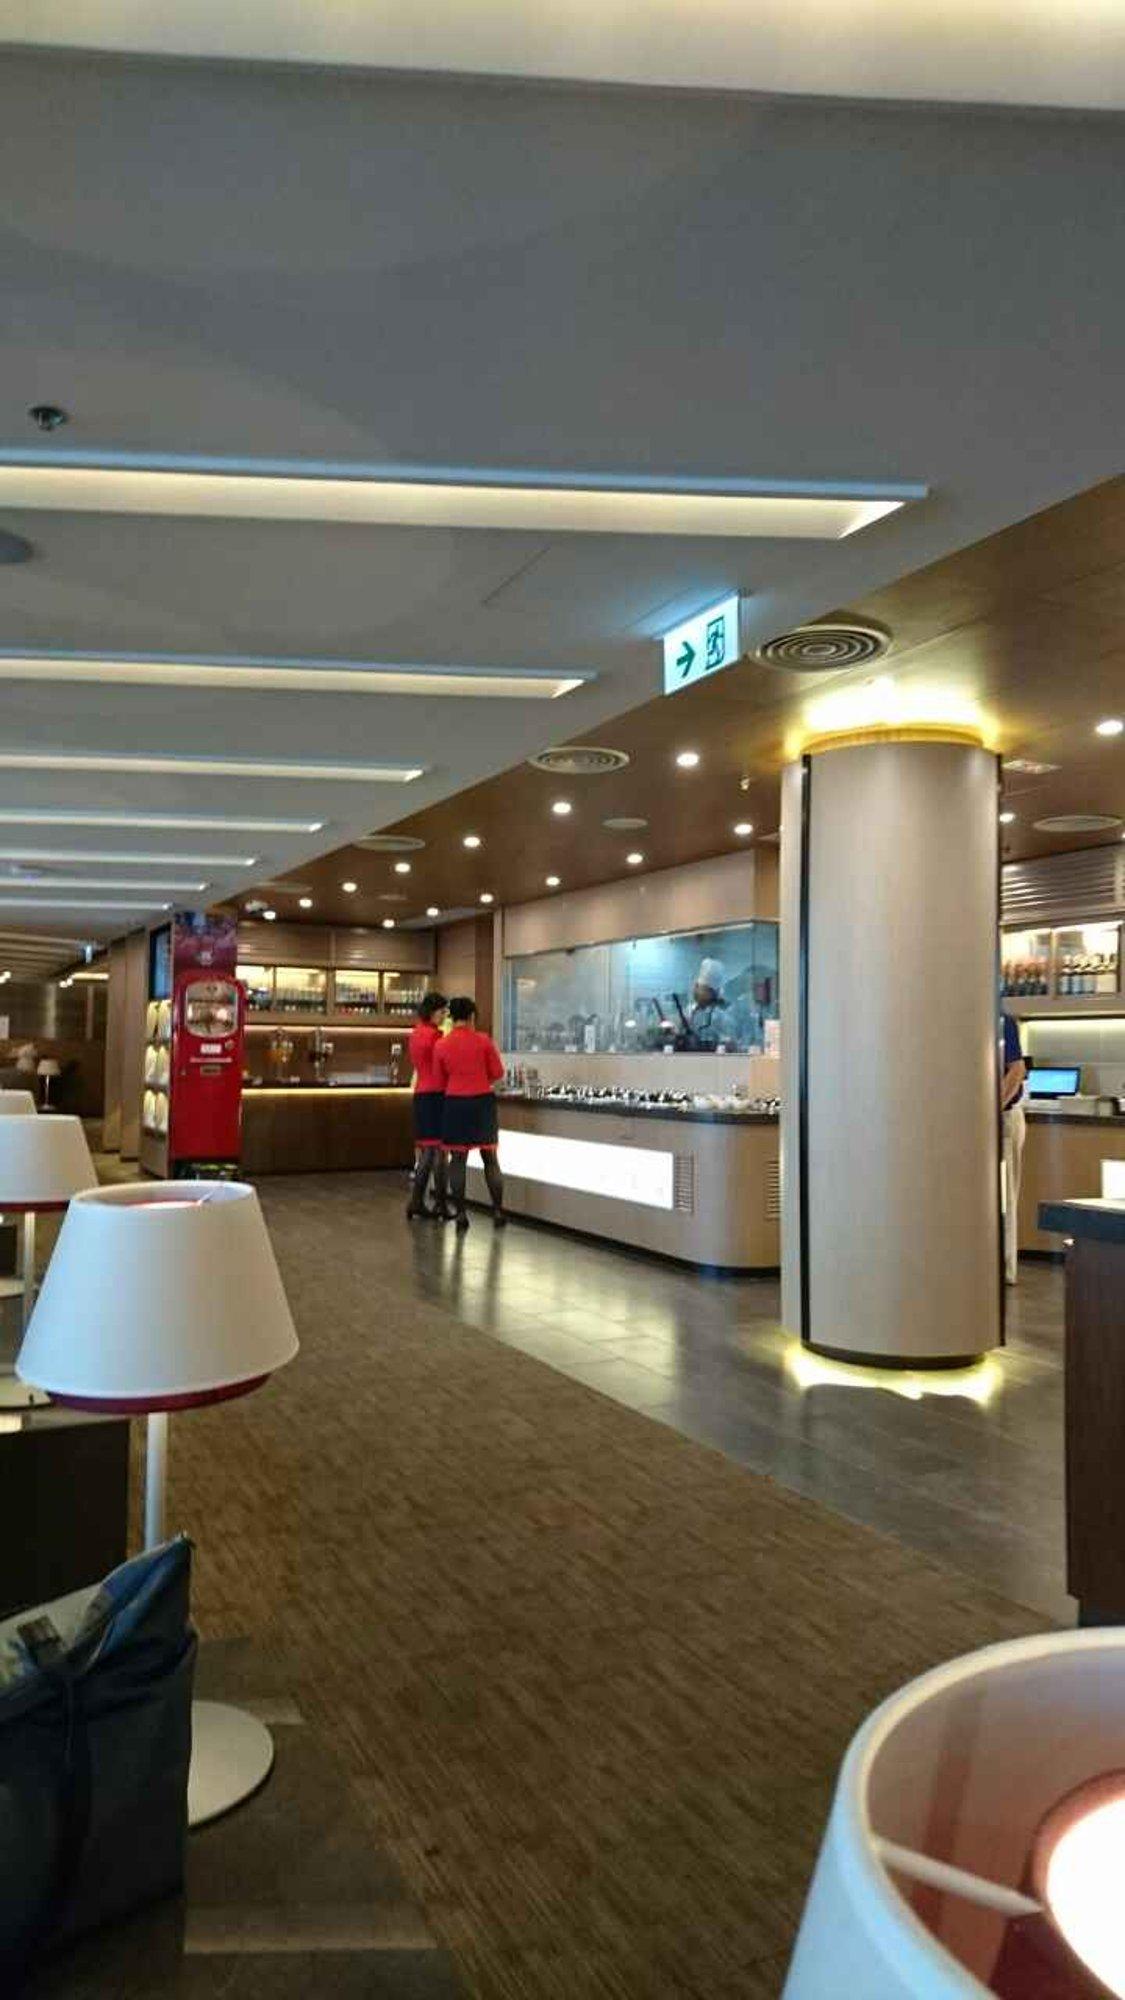 Hong Kong Airlines VIP Lounge (Club Bauhinia) image 24 of 40